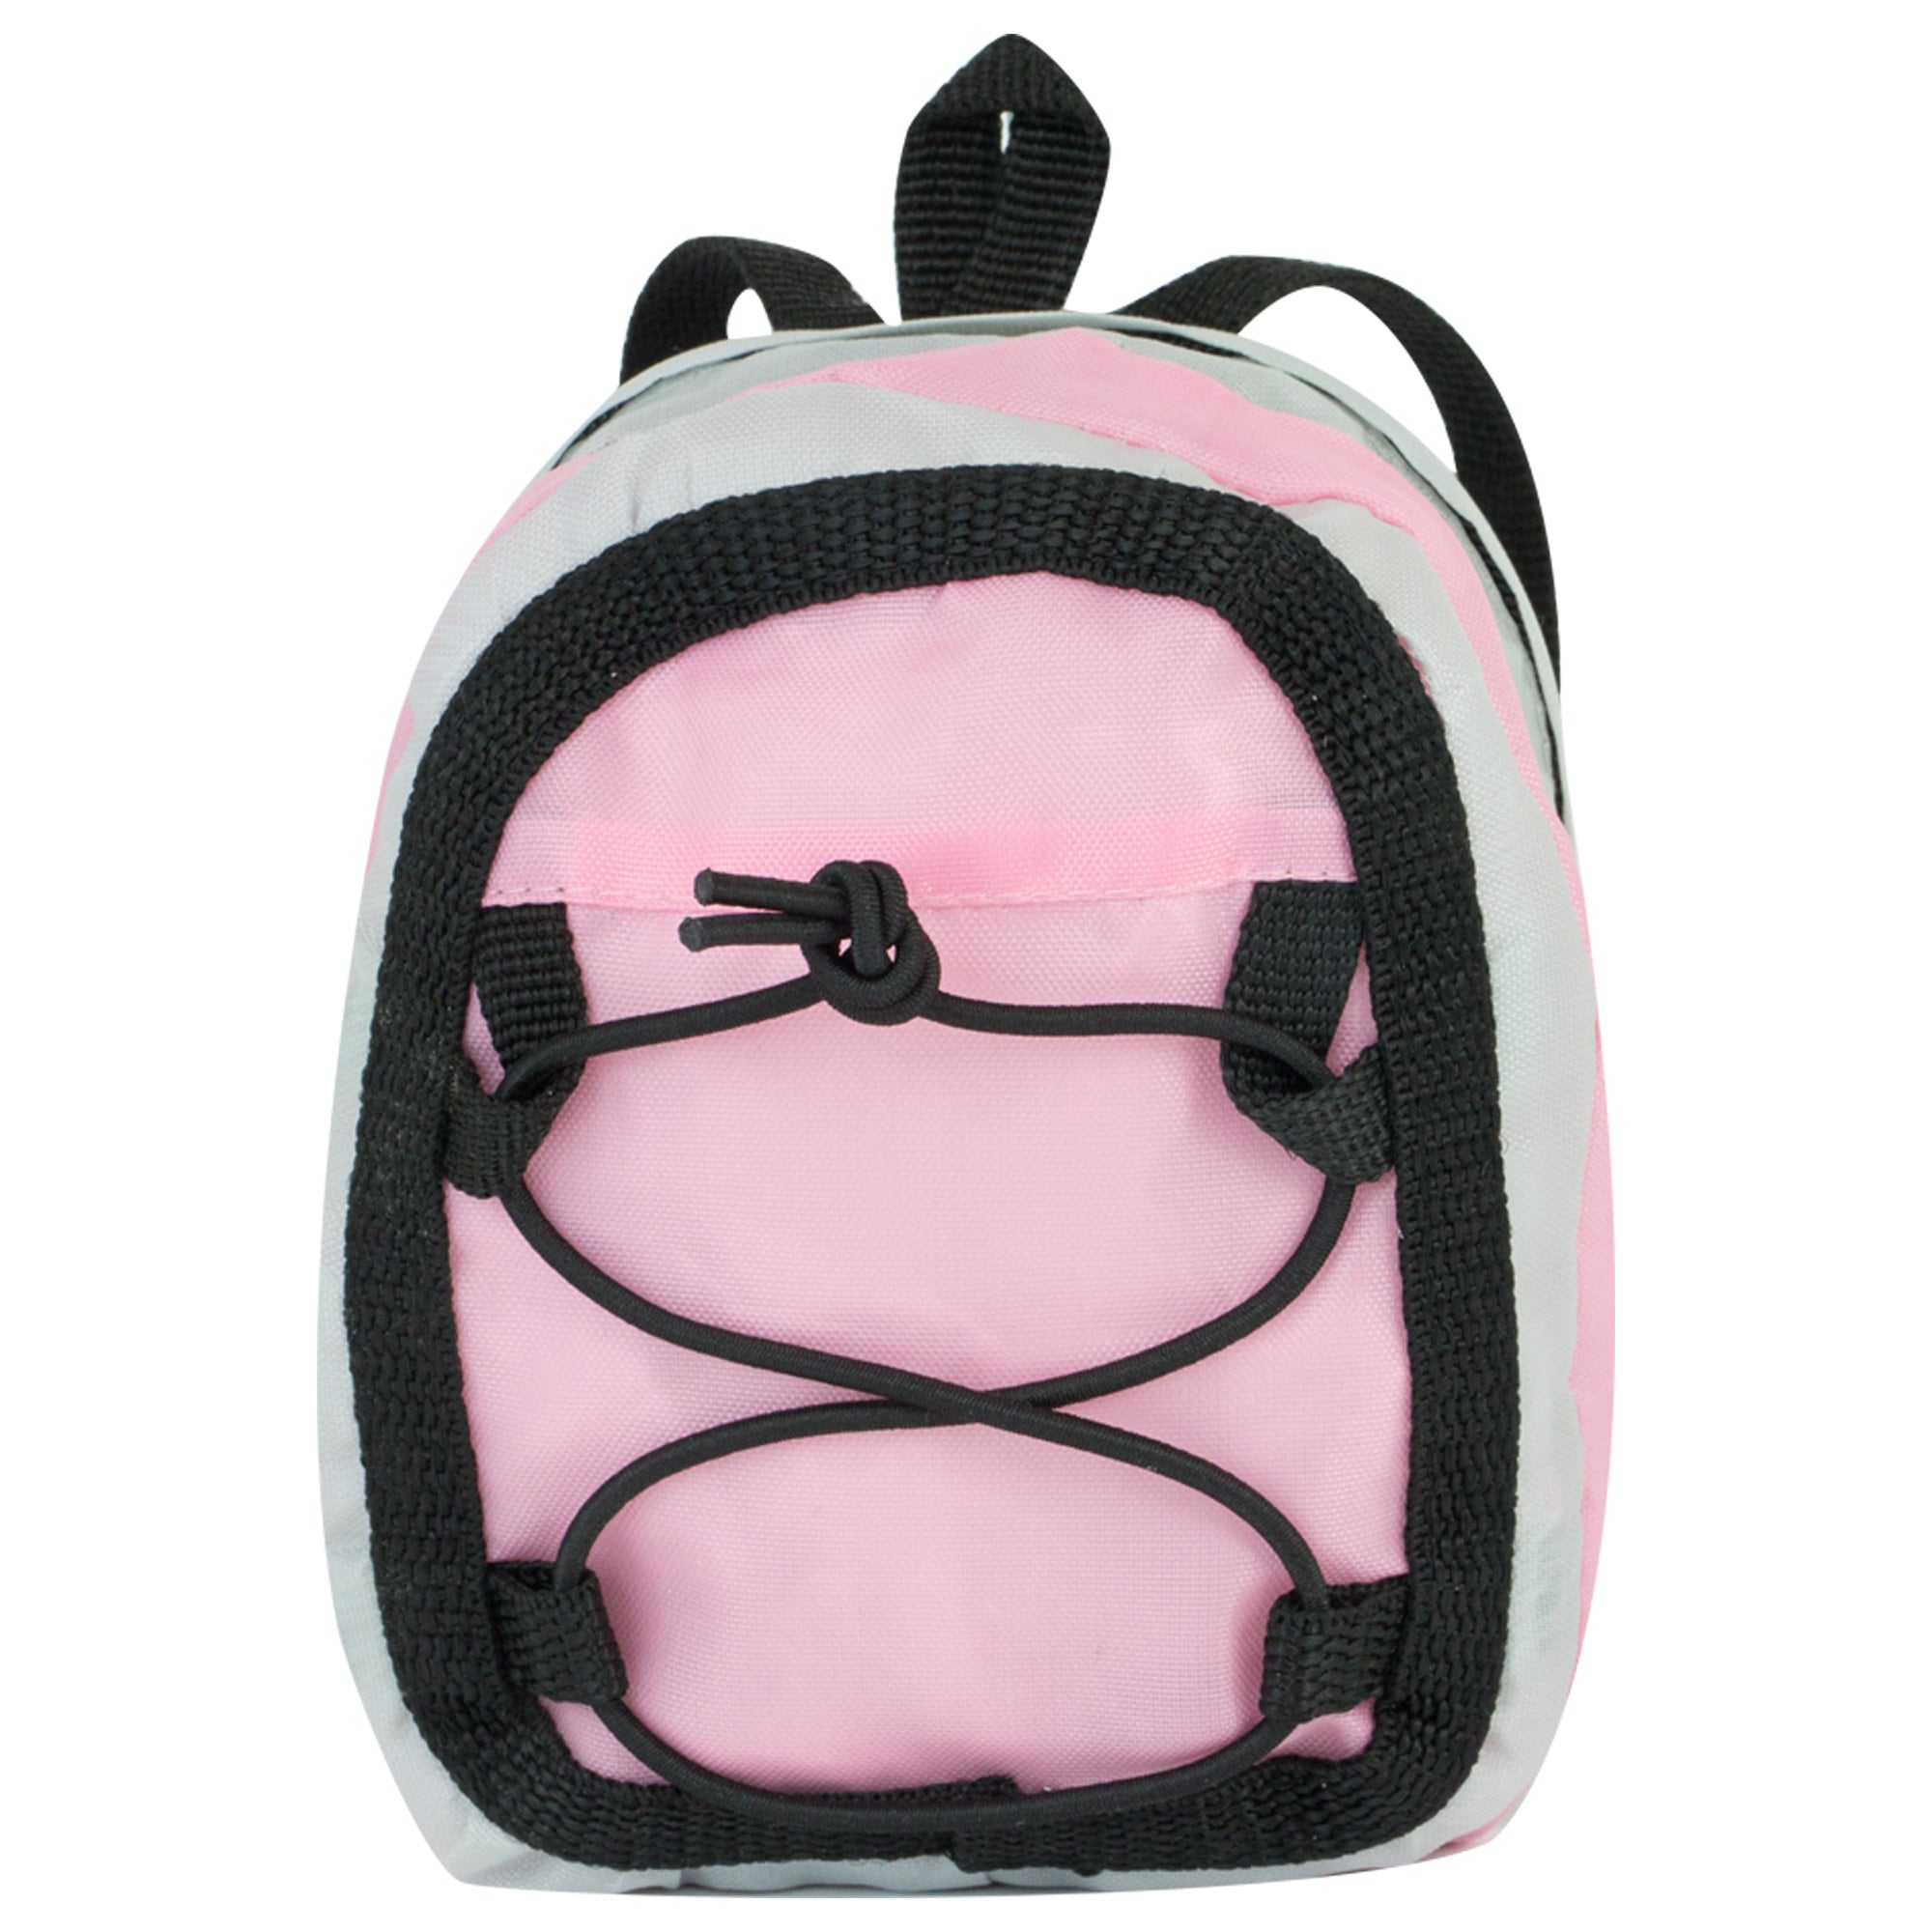 Sophia’s Sporty Backpack with Black & Gray Trim, Water Bottle Holder, & Zippered Pocket for 18” Dolls, Light Pink